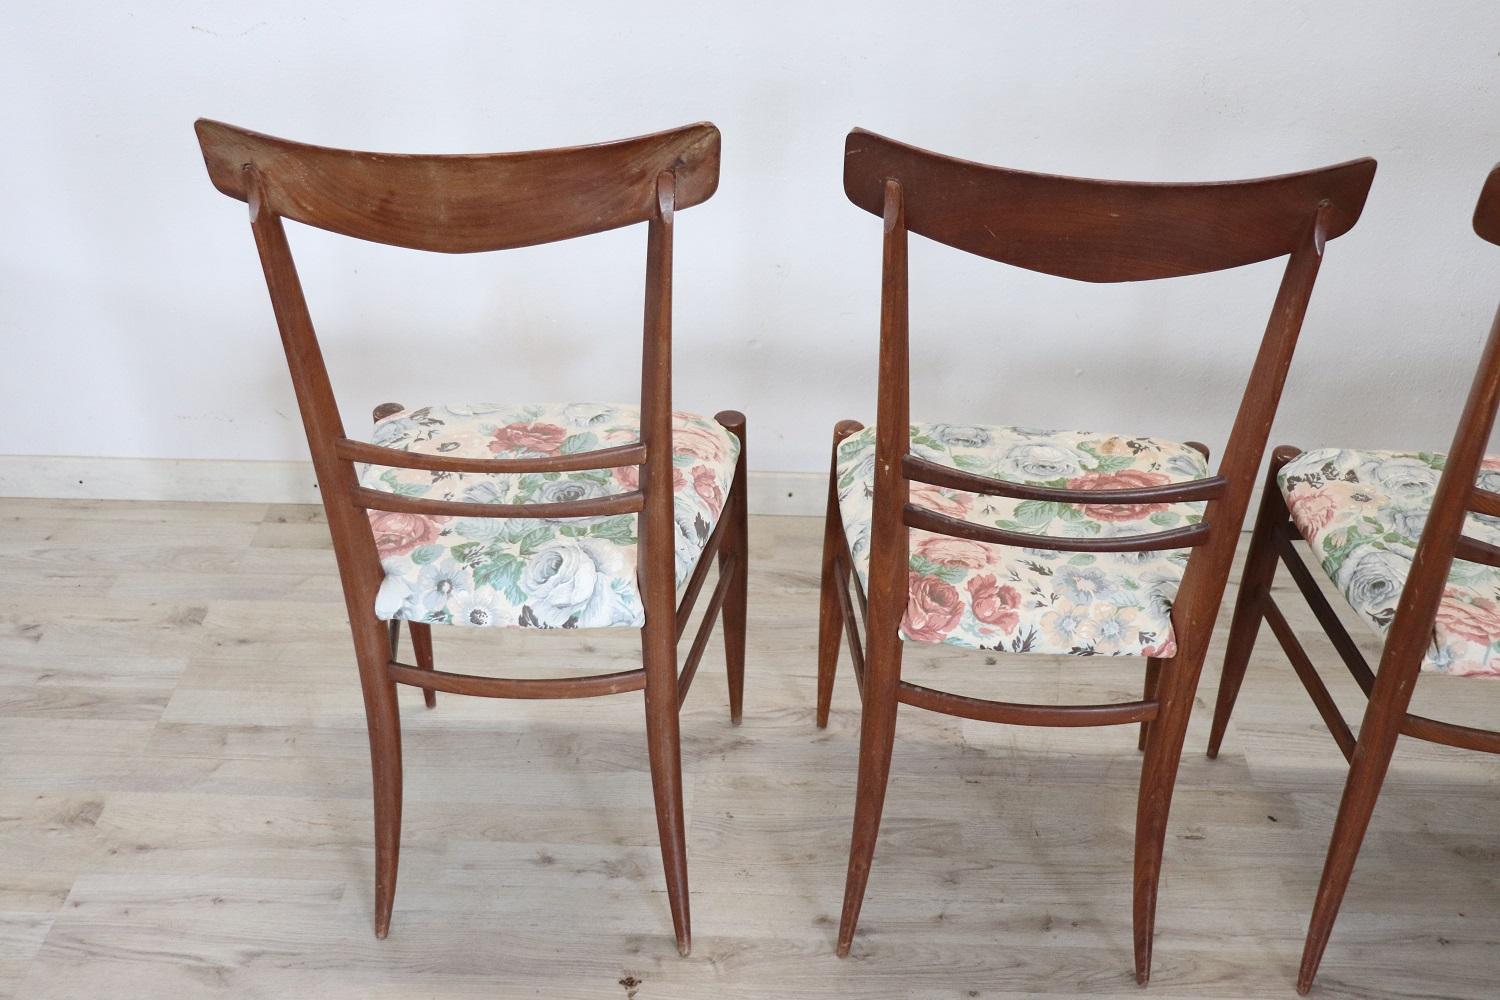 20th Century Italian Design Set of Four Chairs in Teak, Ico Parisi 1950s For Sale 6